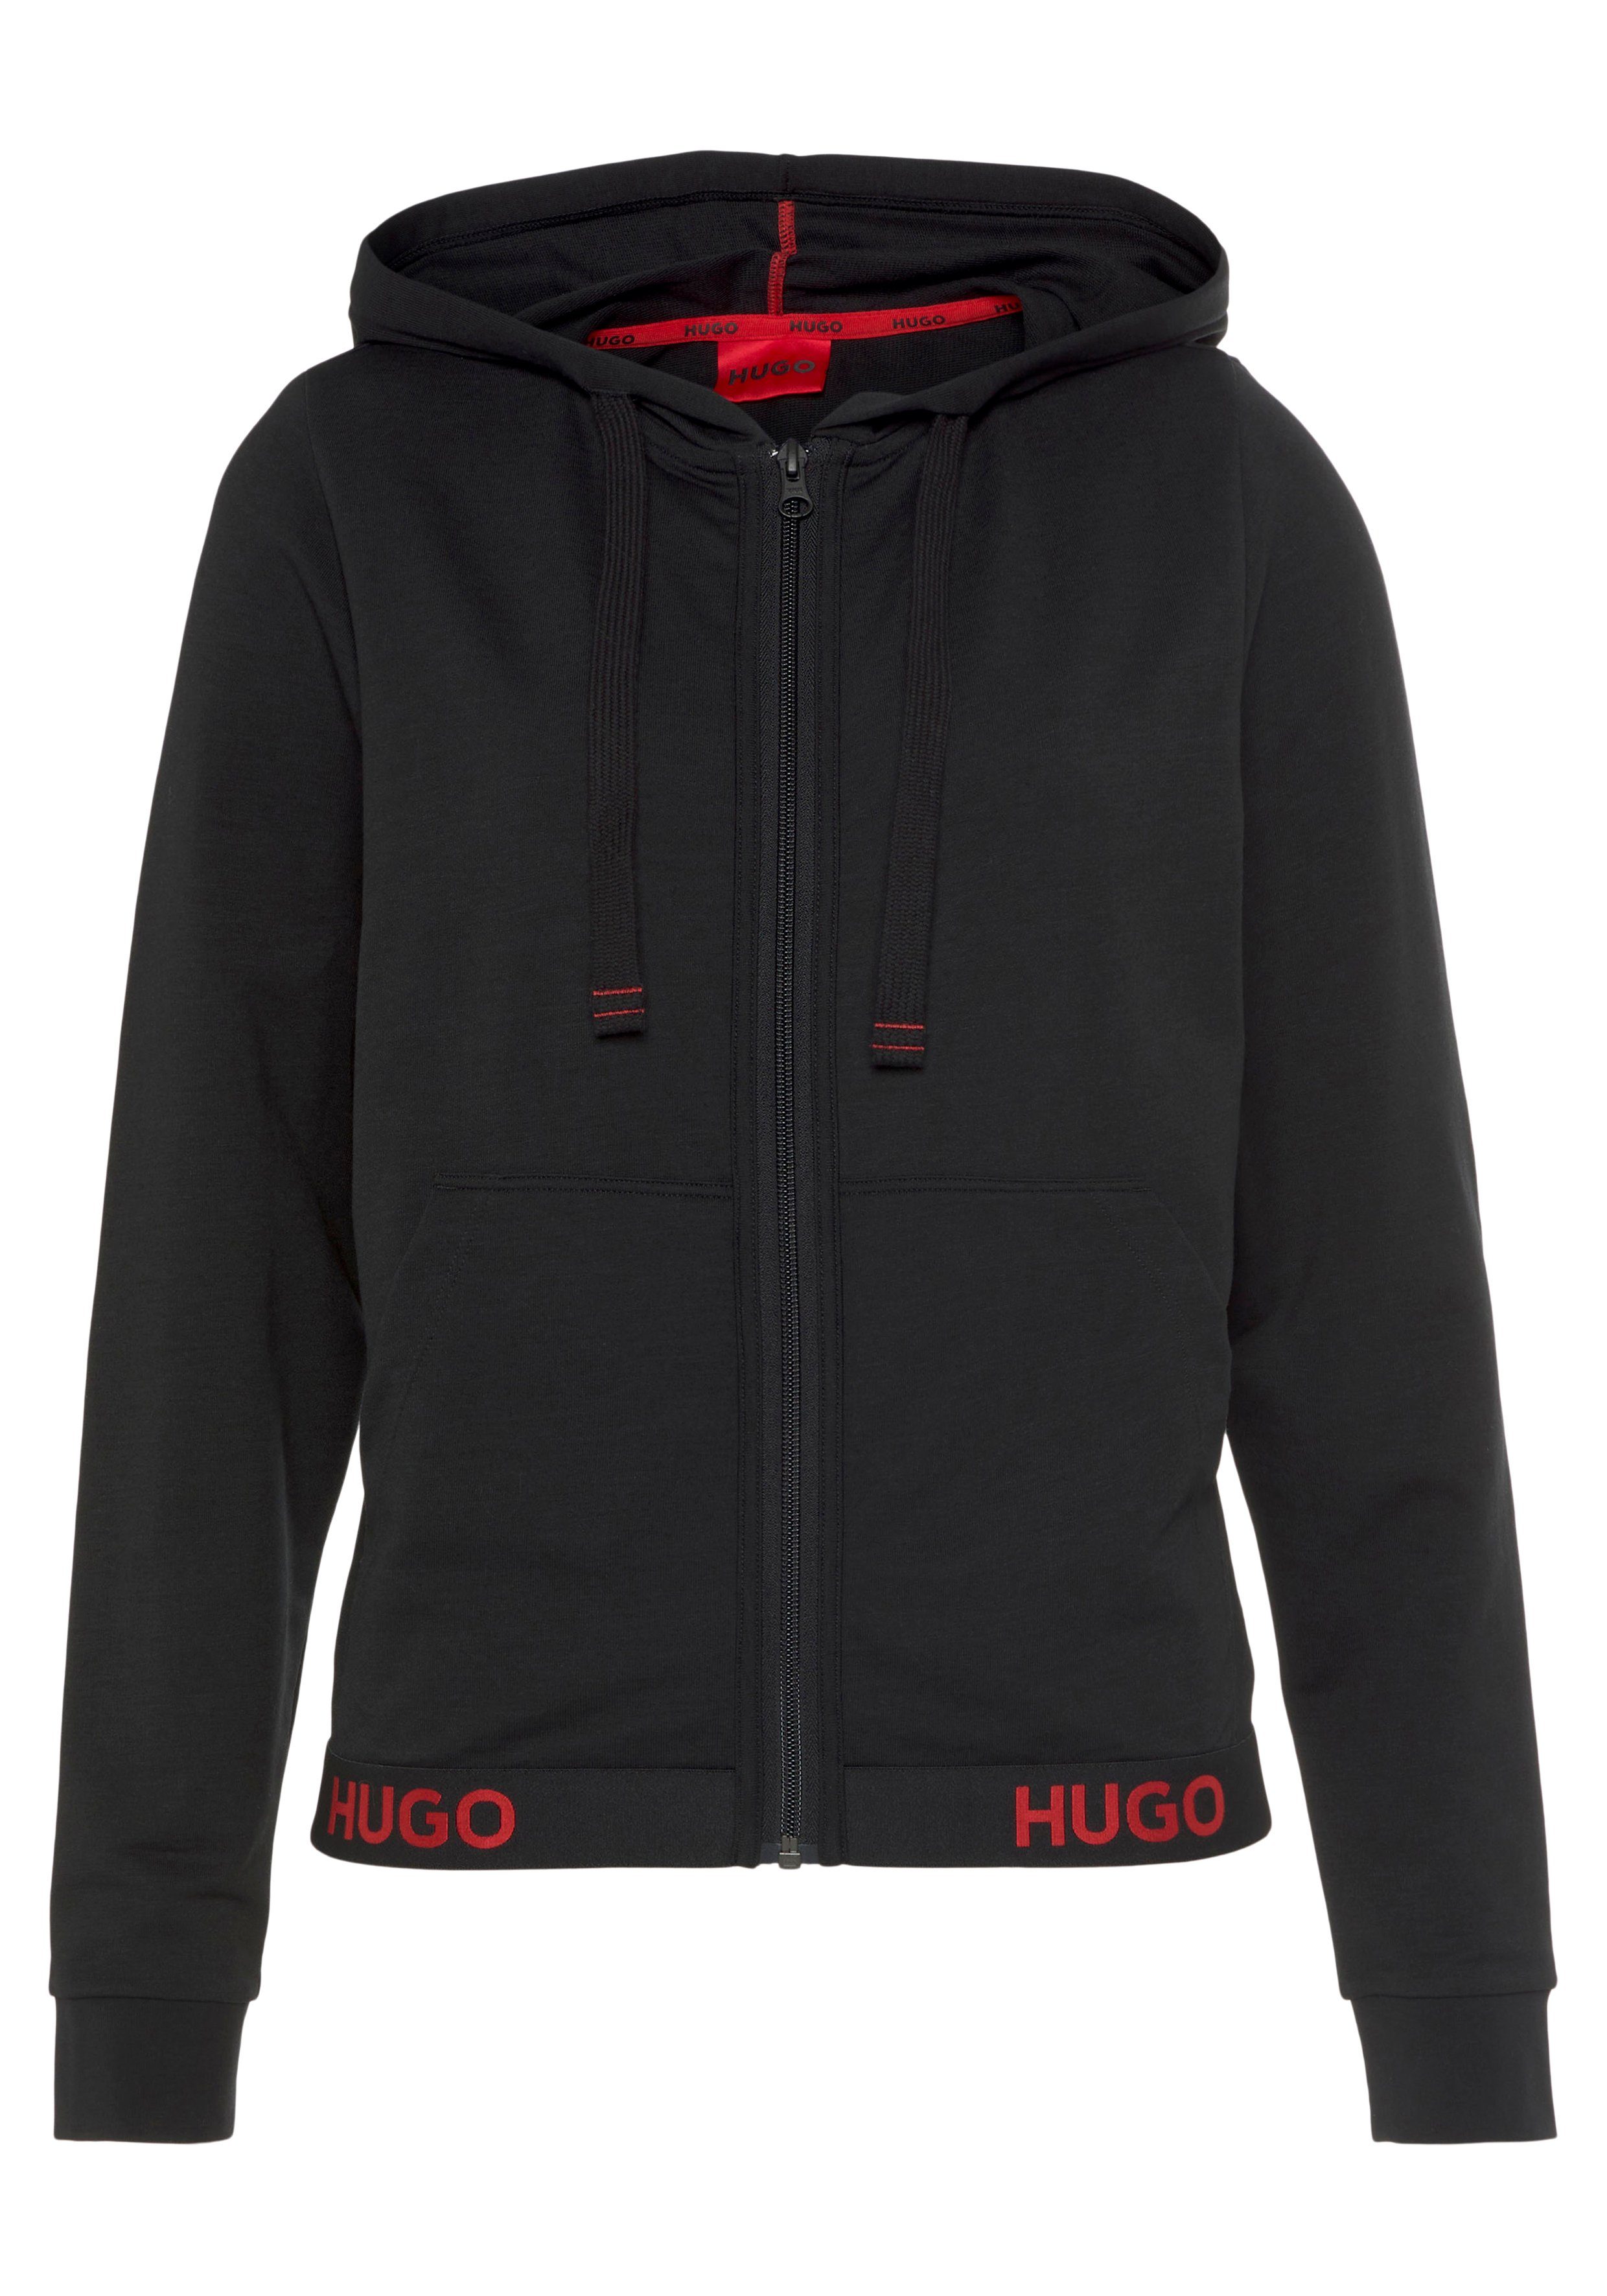 HUGO Hugo Logo-Schriftzug SPORTY LOGO_JACKET mit Kapuzensweatjacke 01 10249156 black